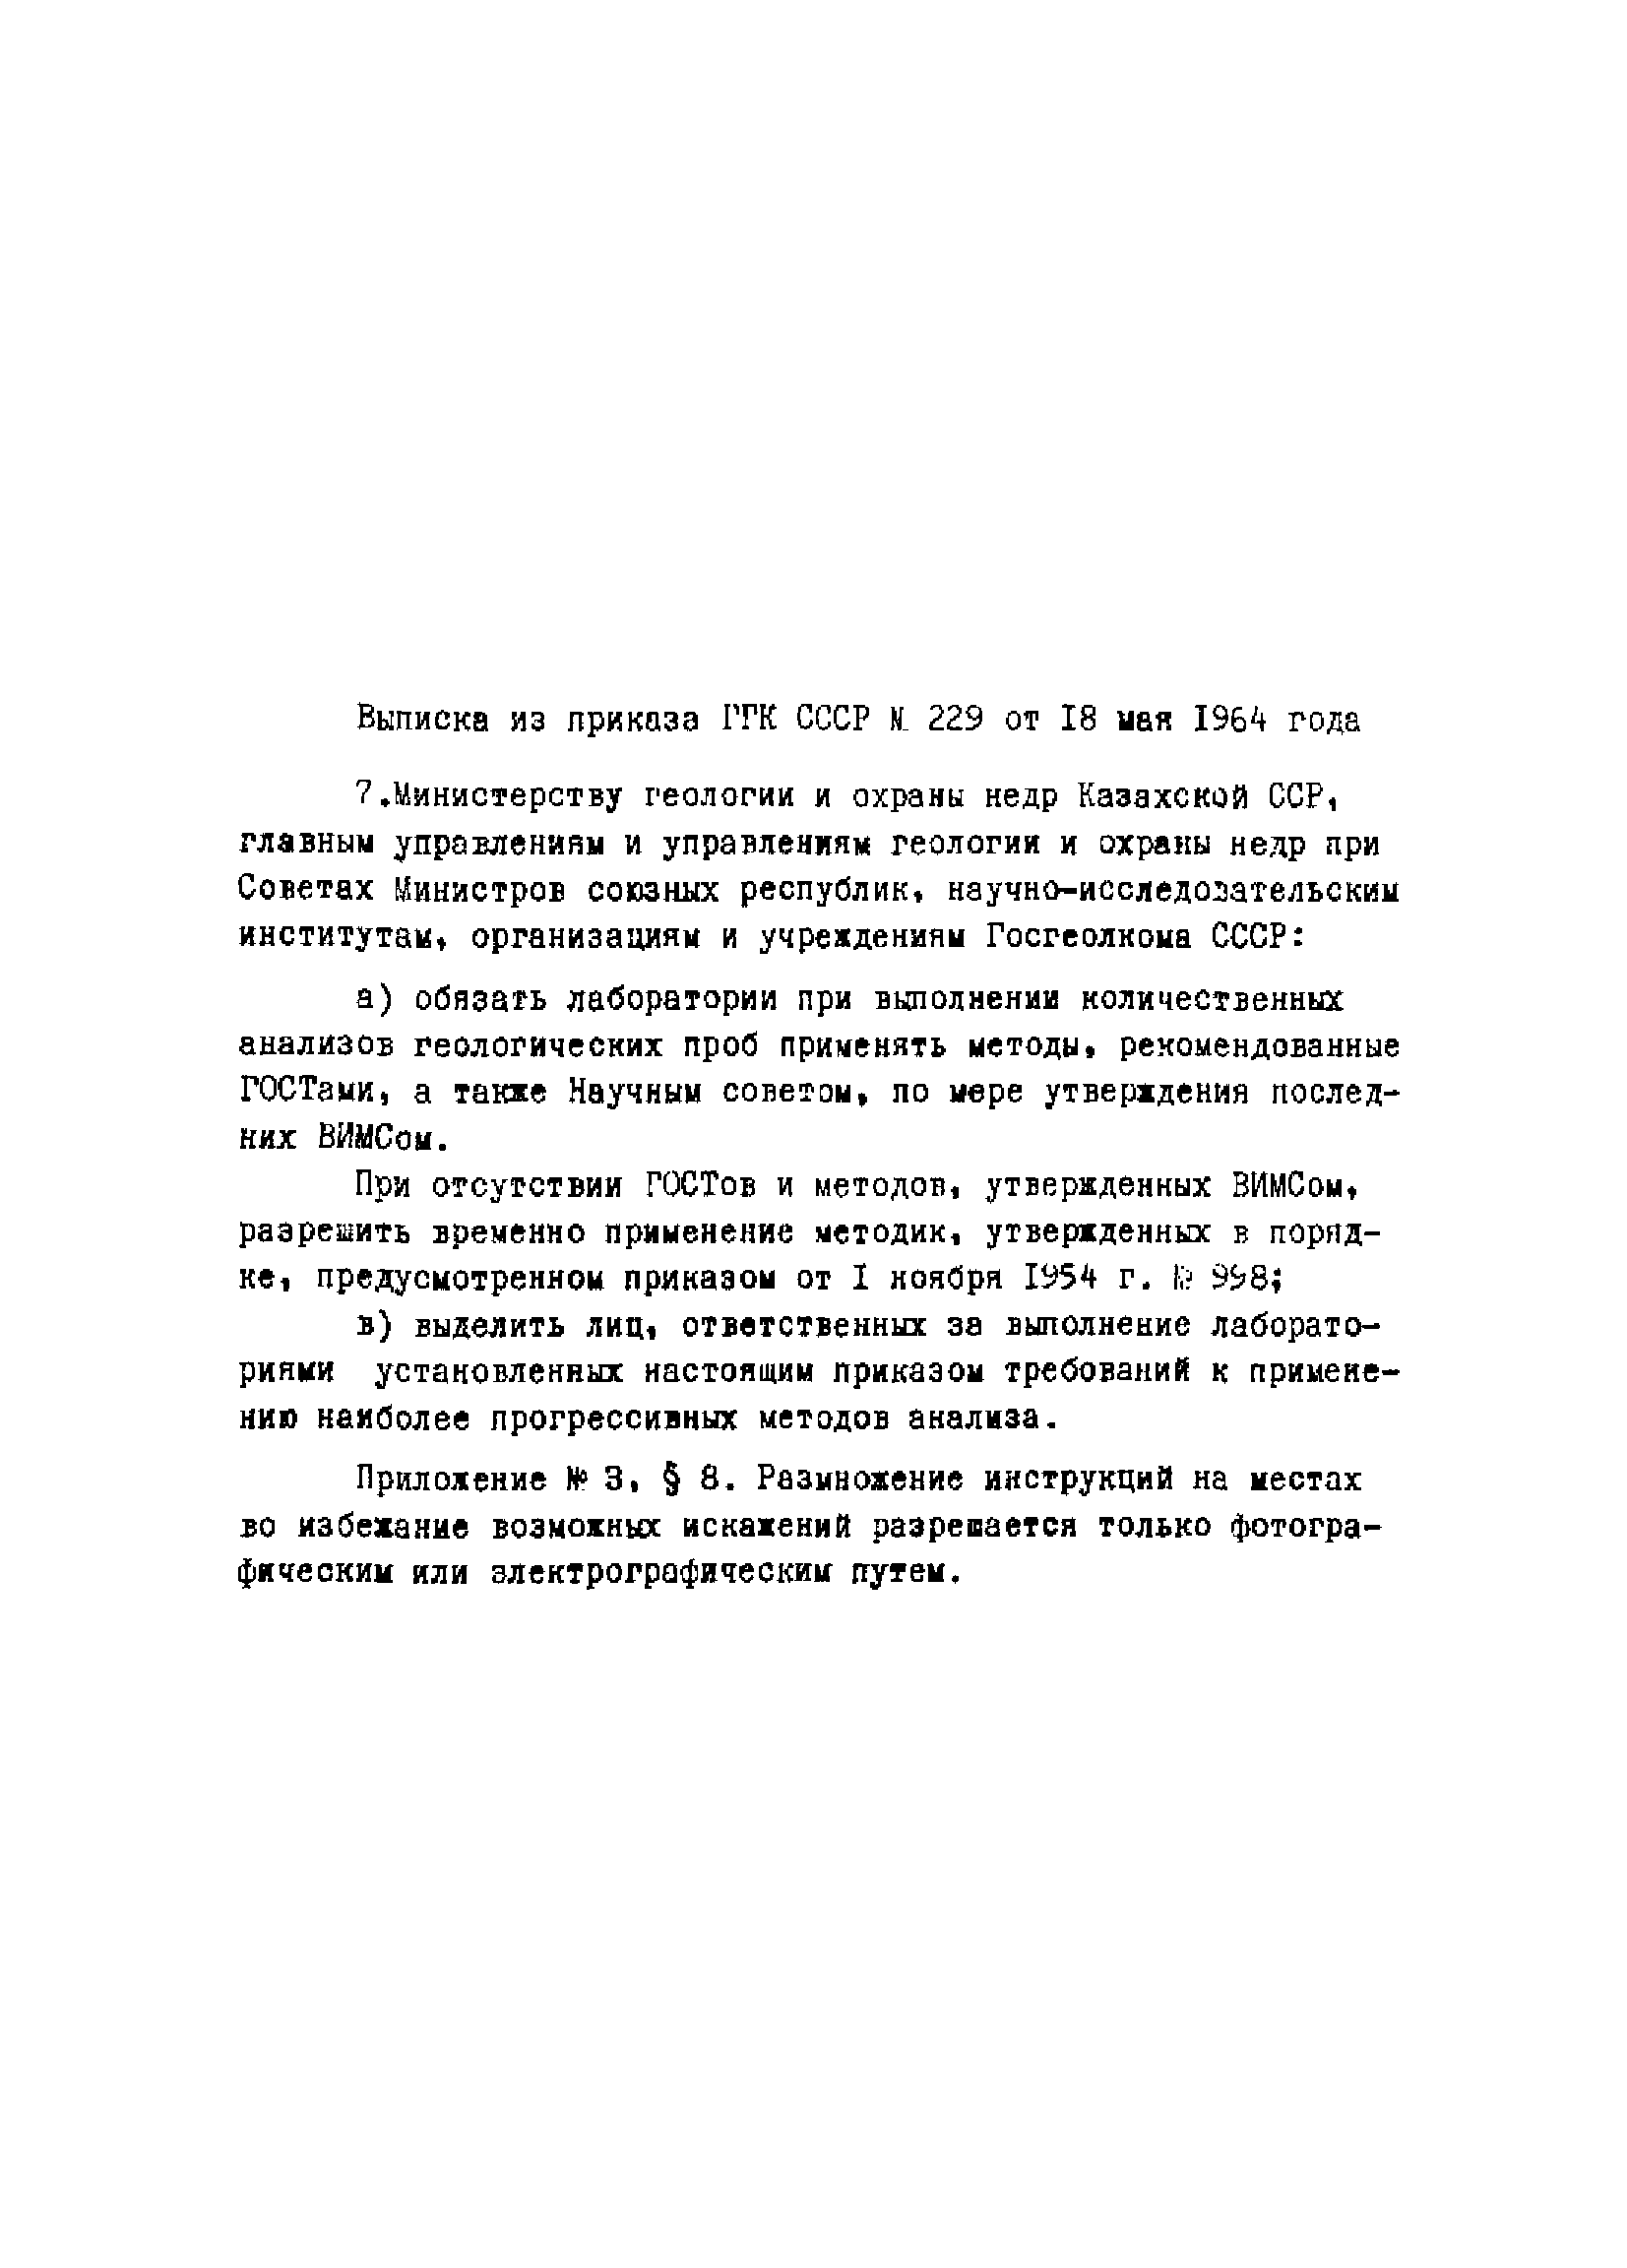 Инструкция НСАМ 93-Х